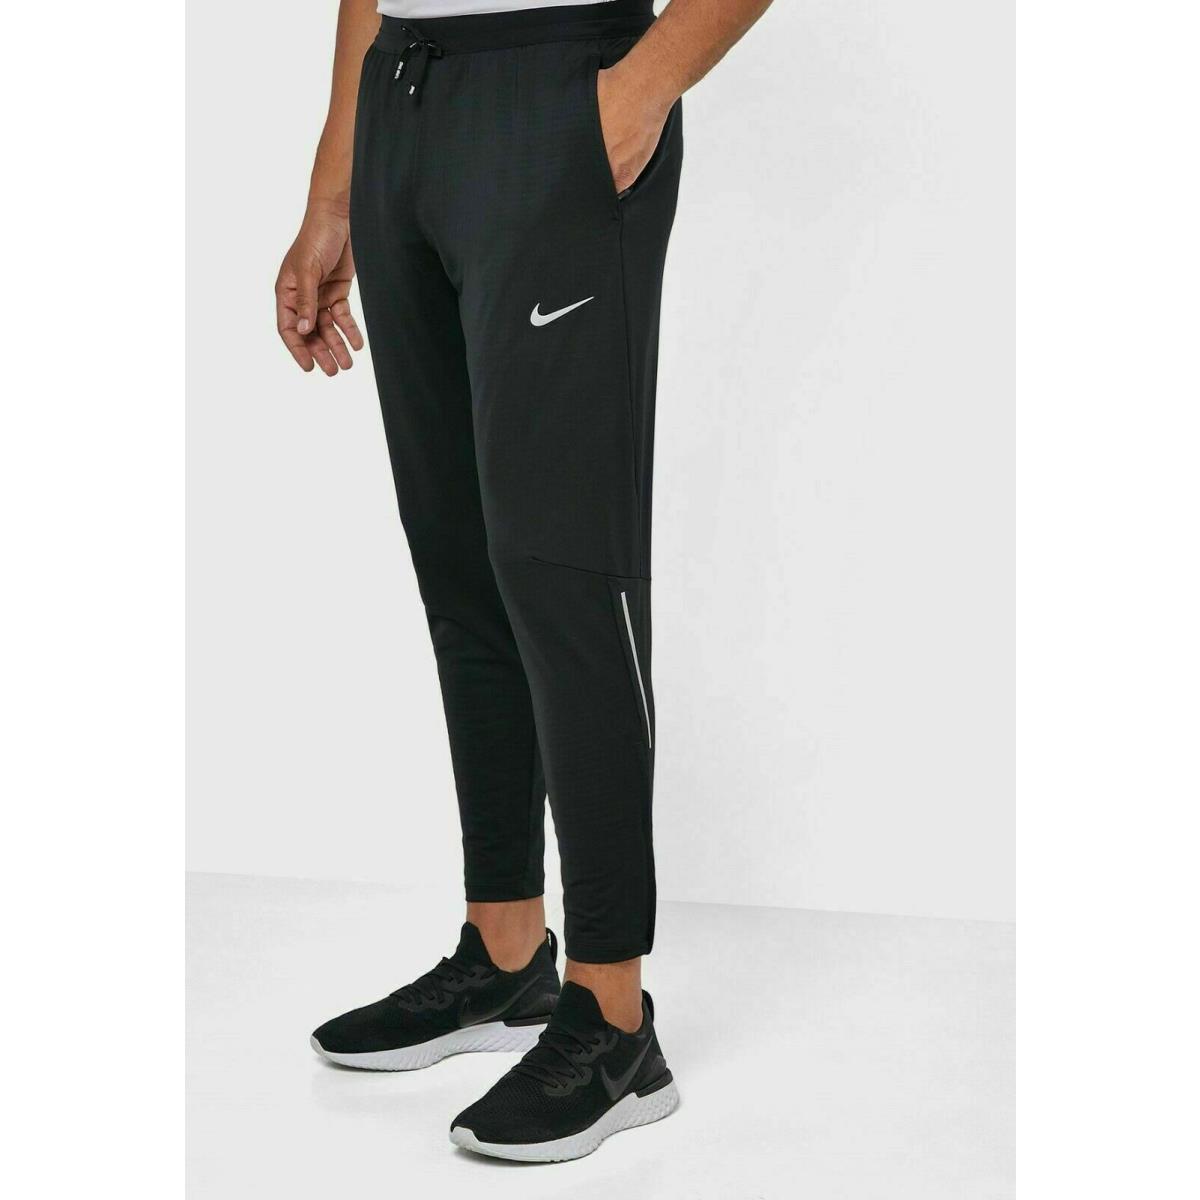 Nike Phenom Knit Running Tight Pants Size XL Men Black Reflective BV4813 010